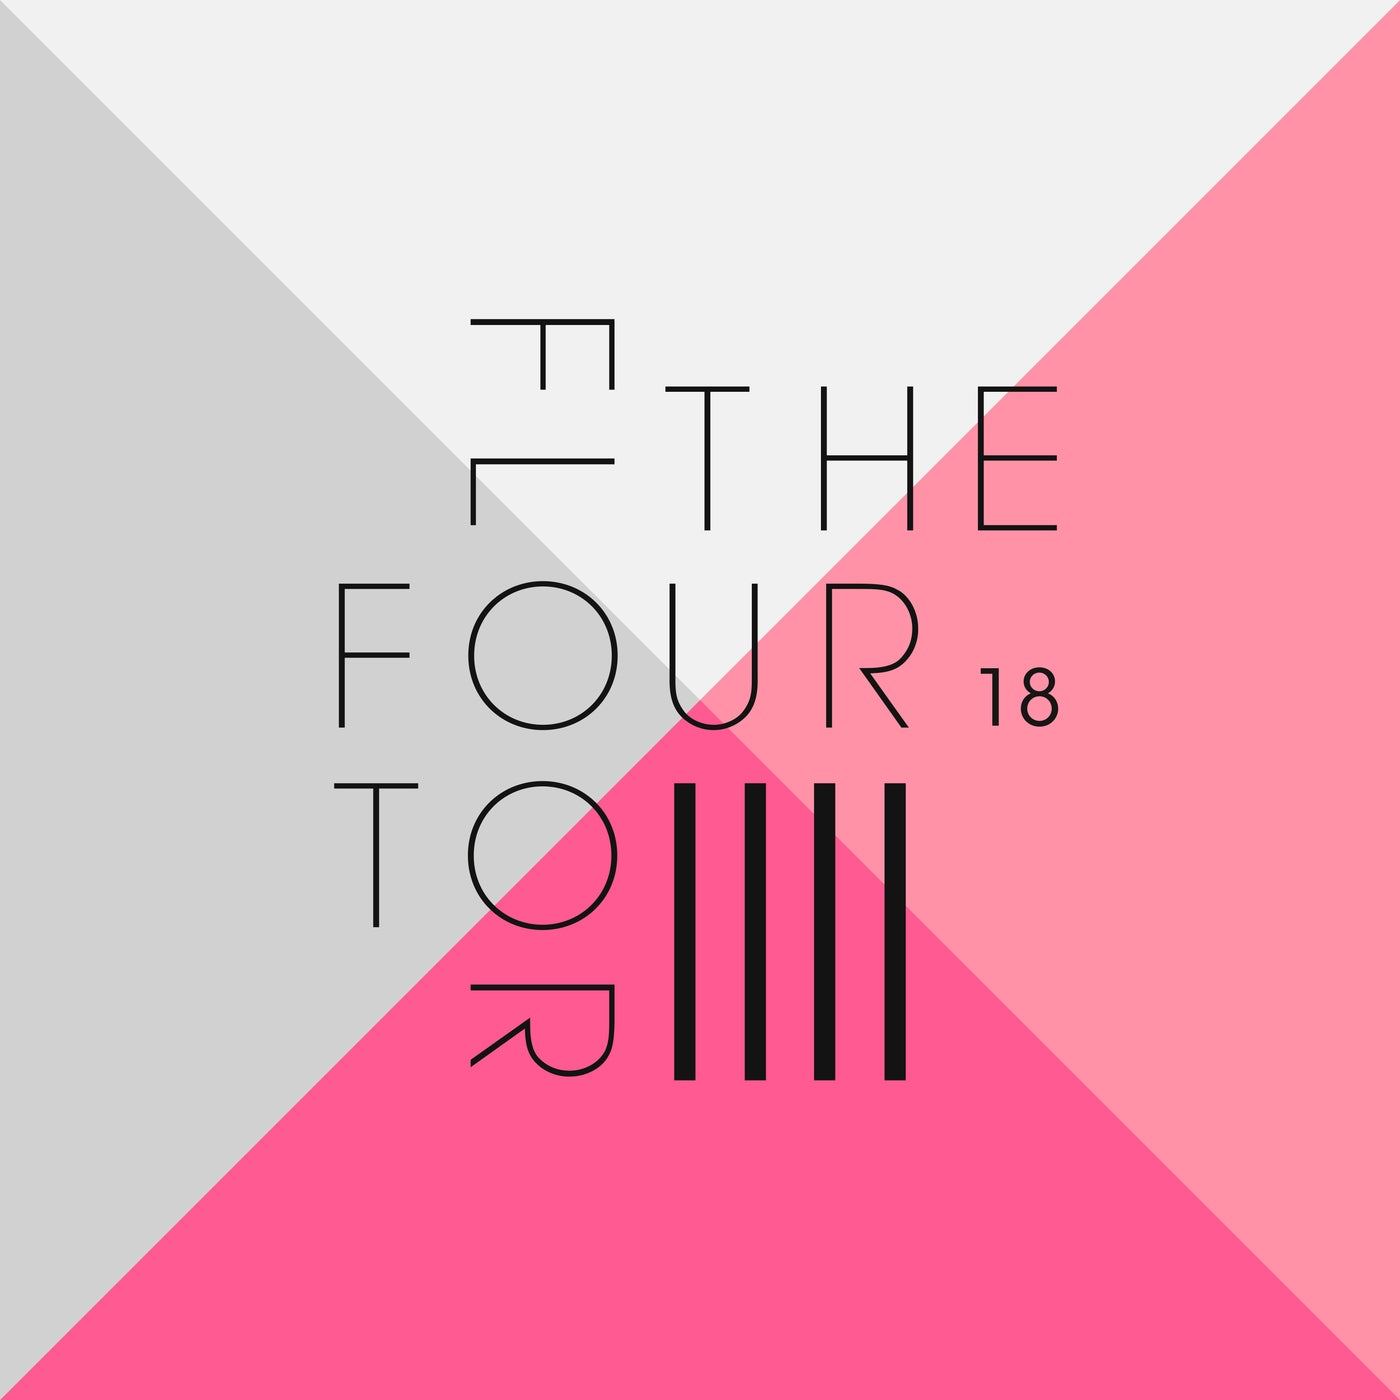 VA – Four To The Floor 18 [DIYFTTF18]